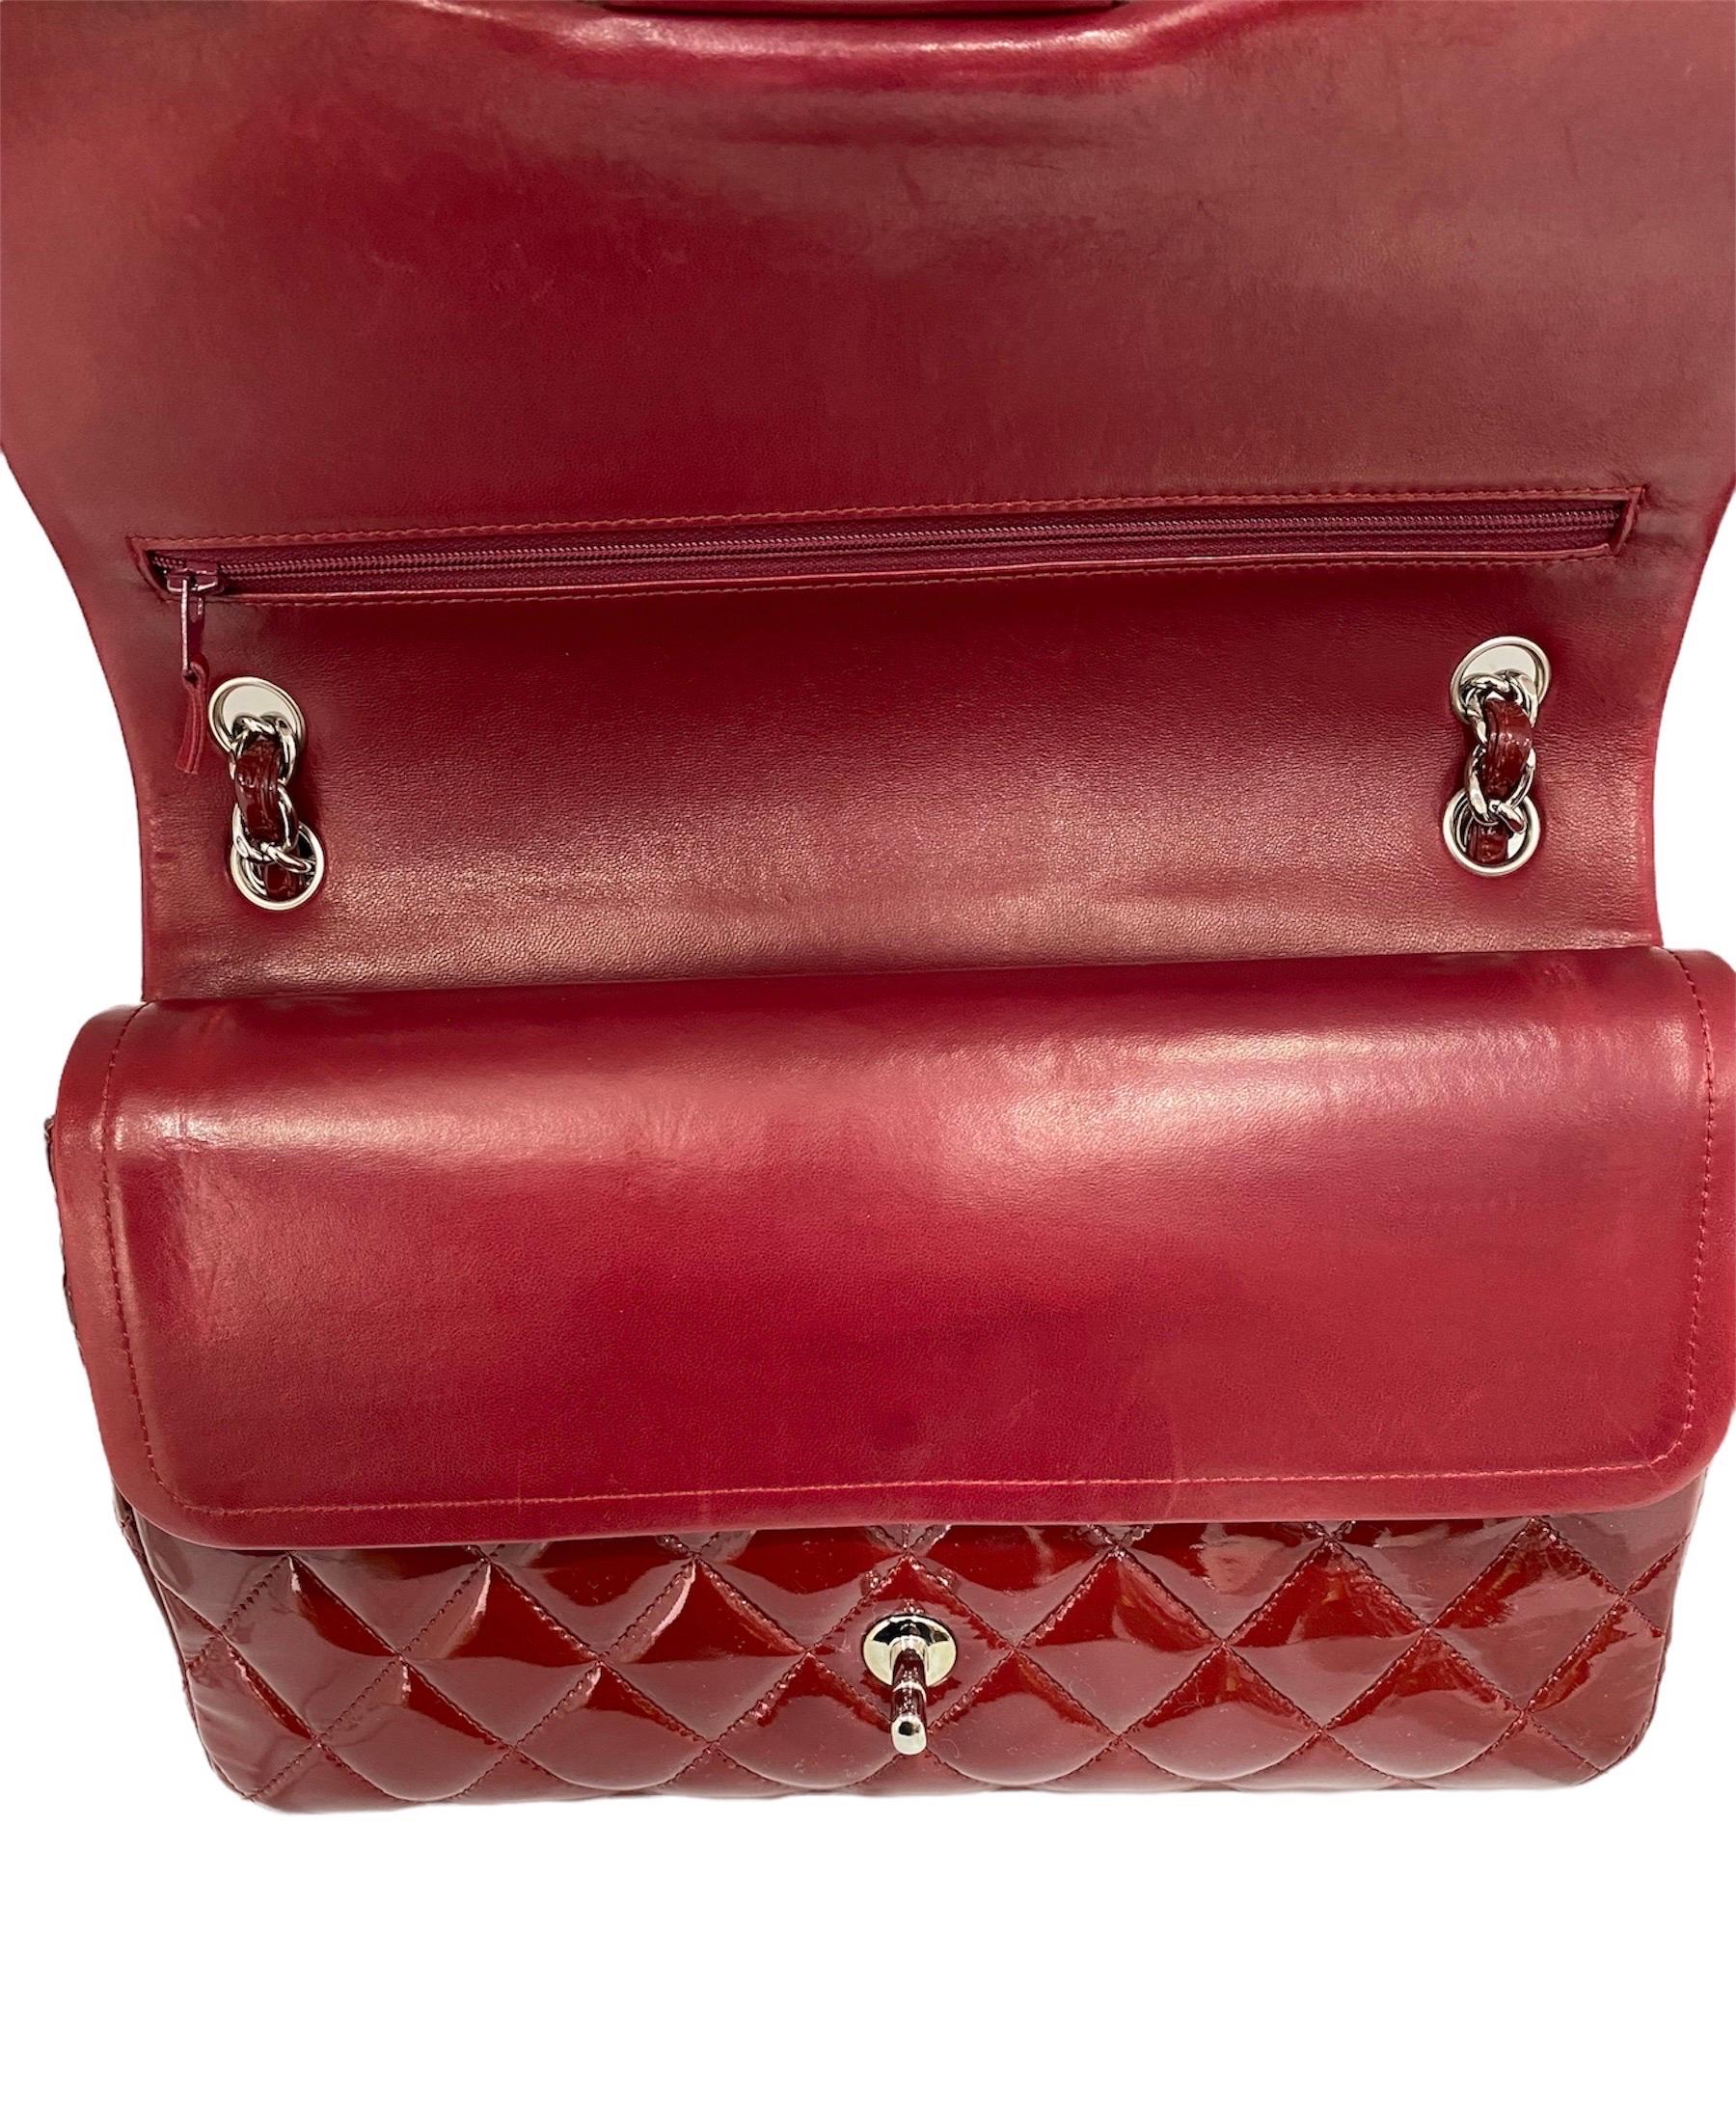 Women's 2011 Chanel Jumbo Red Vernis Shoulder Bag